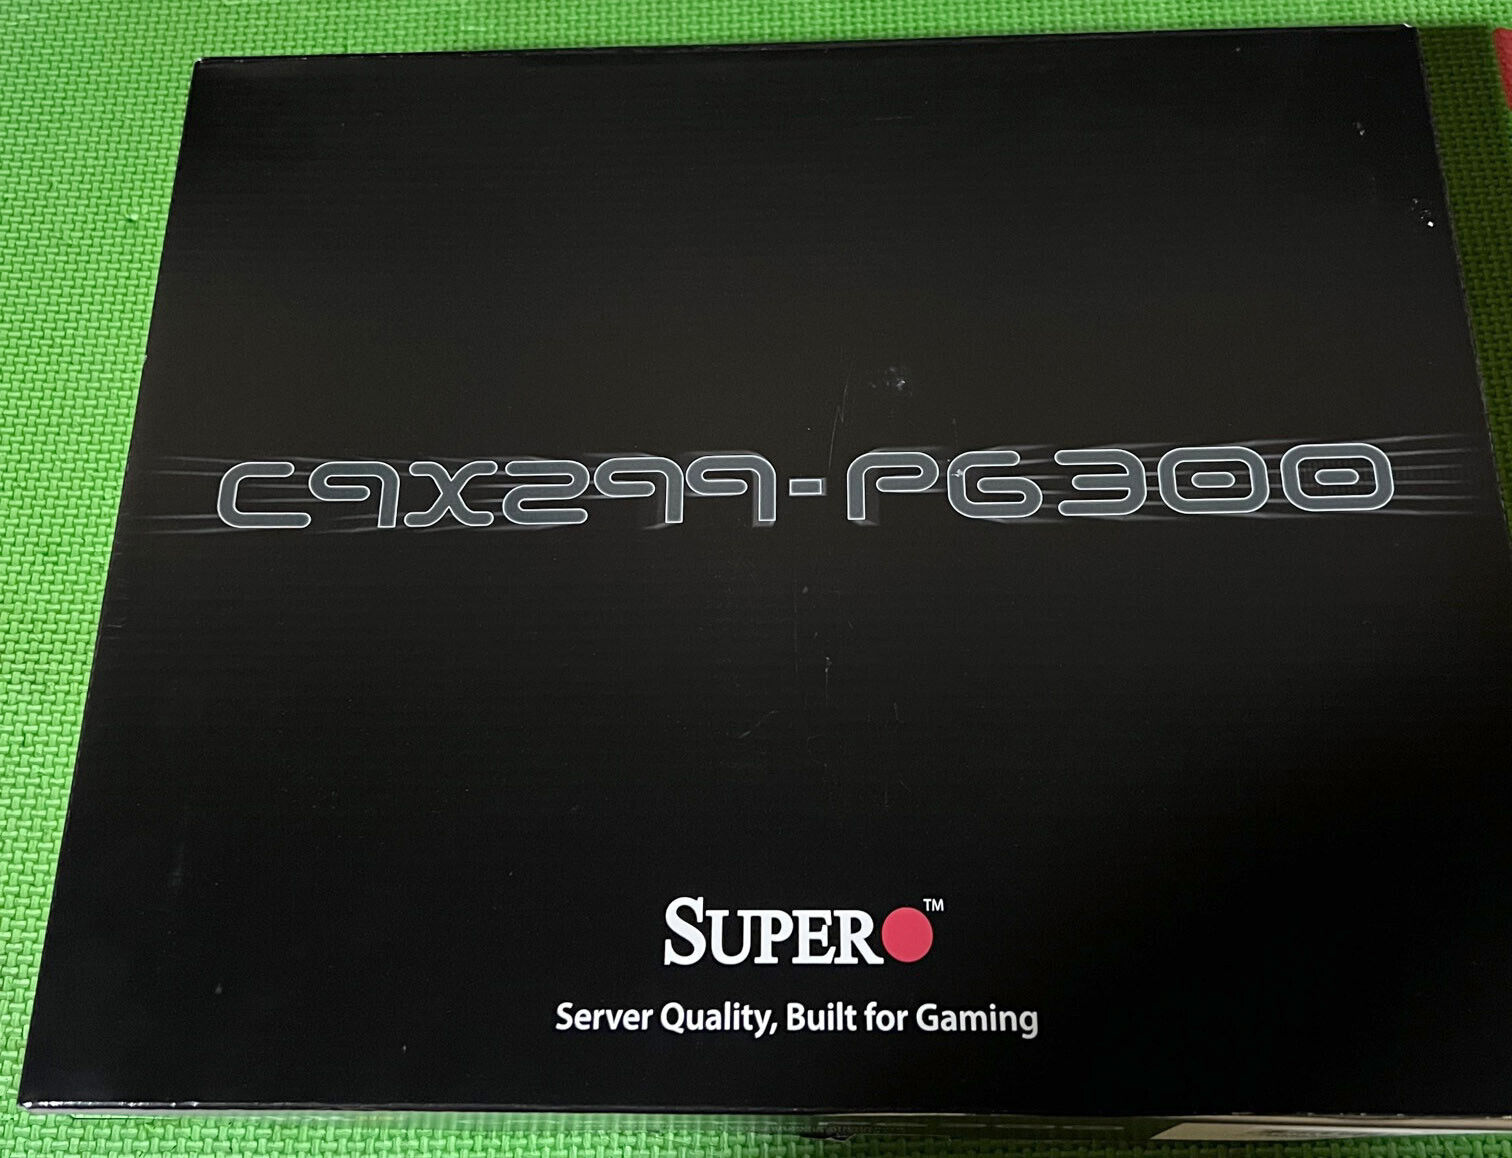 SUPERMICRO SuperO C9X299-PG300 LGA 2066 Intel X299 10G LAN Motherboard